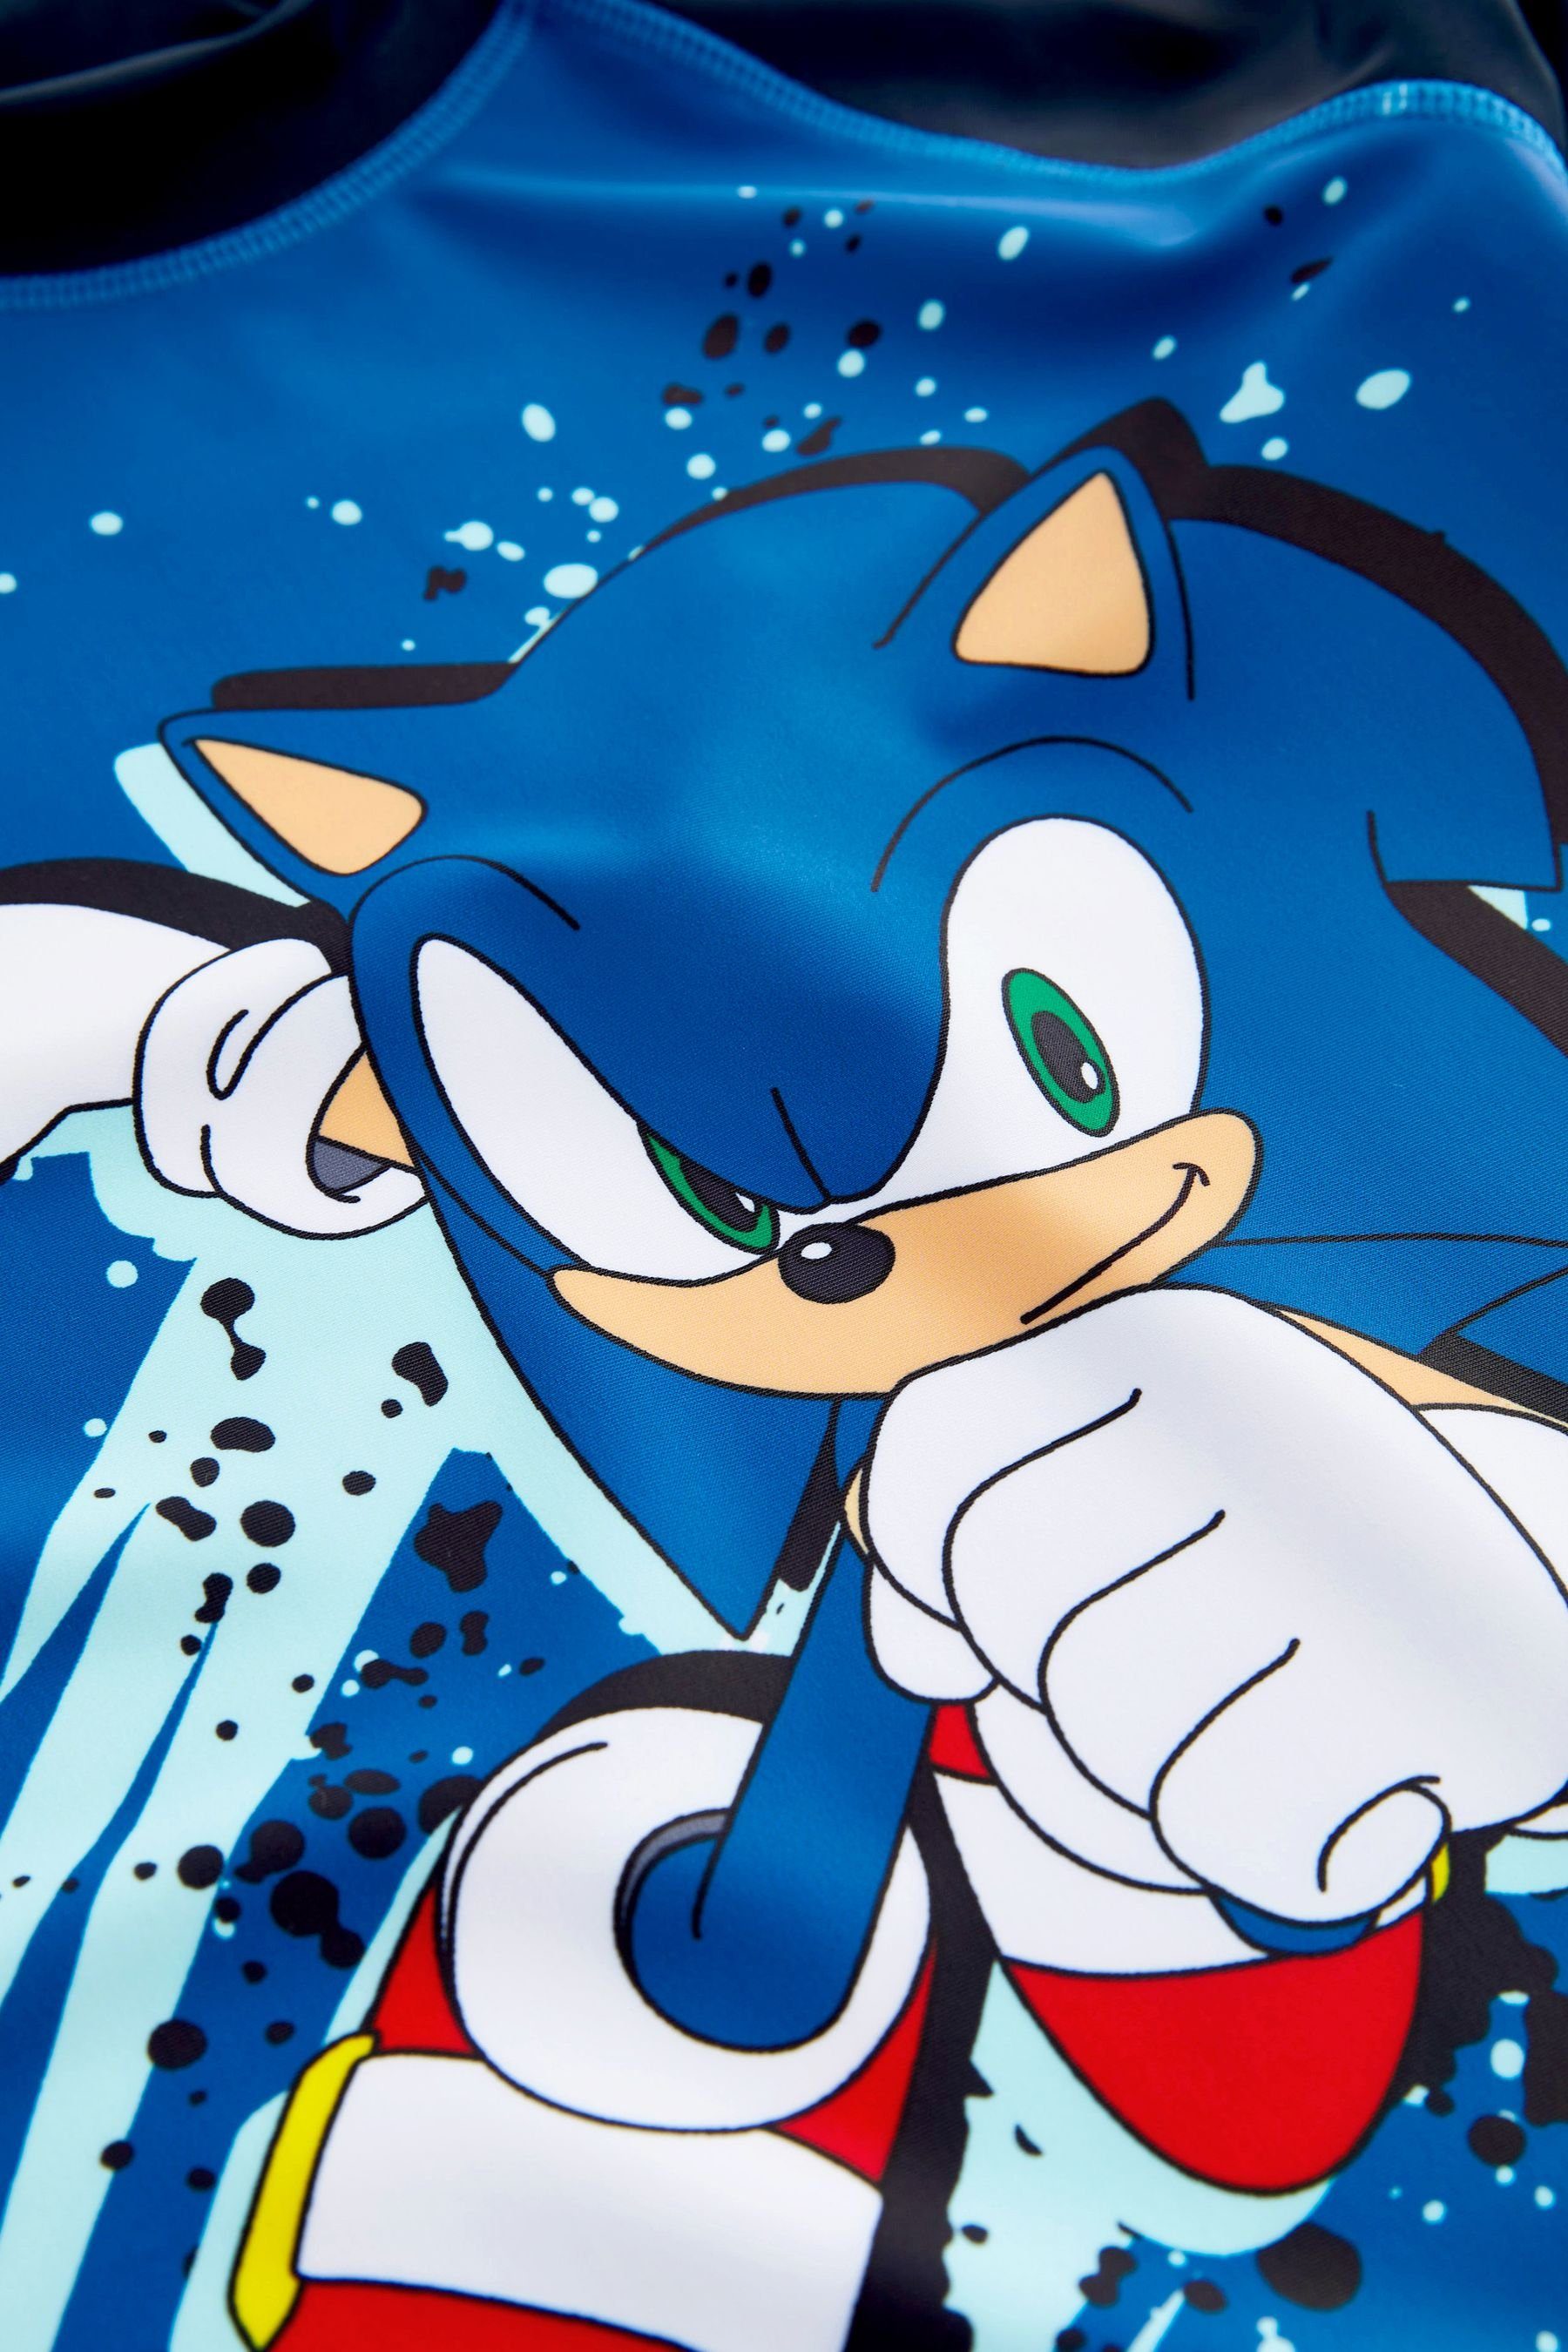 Next Guard Blue Rashie-Shirt Rash Lizenziertes (1-tlg) Sonic